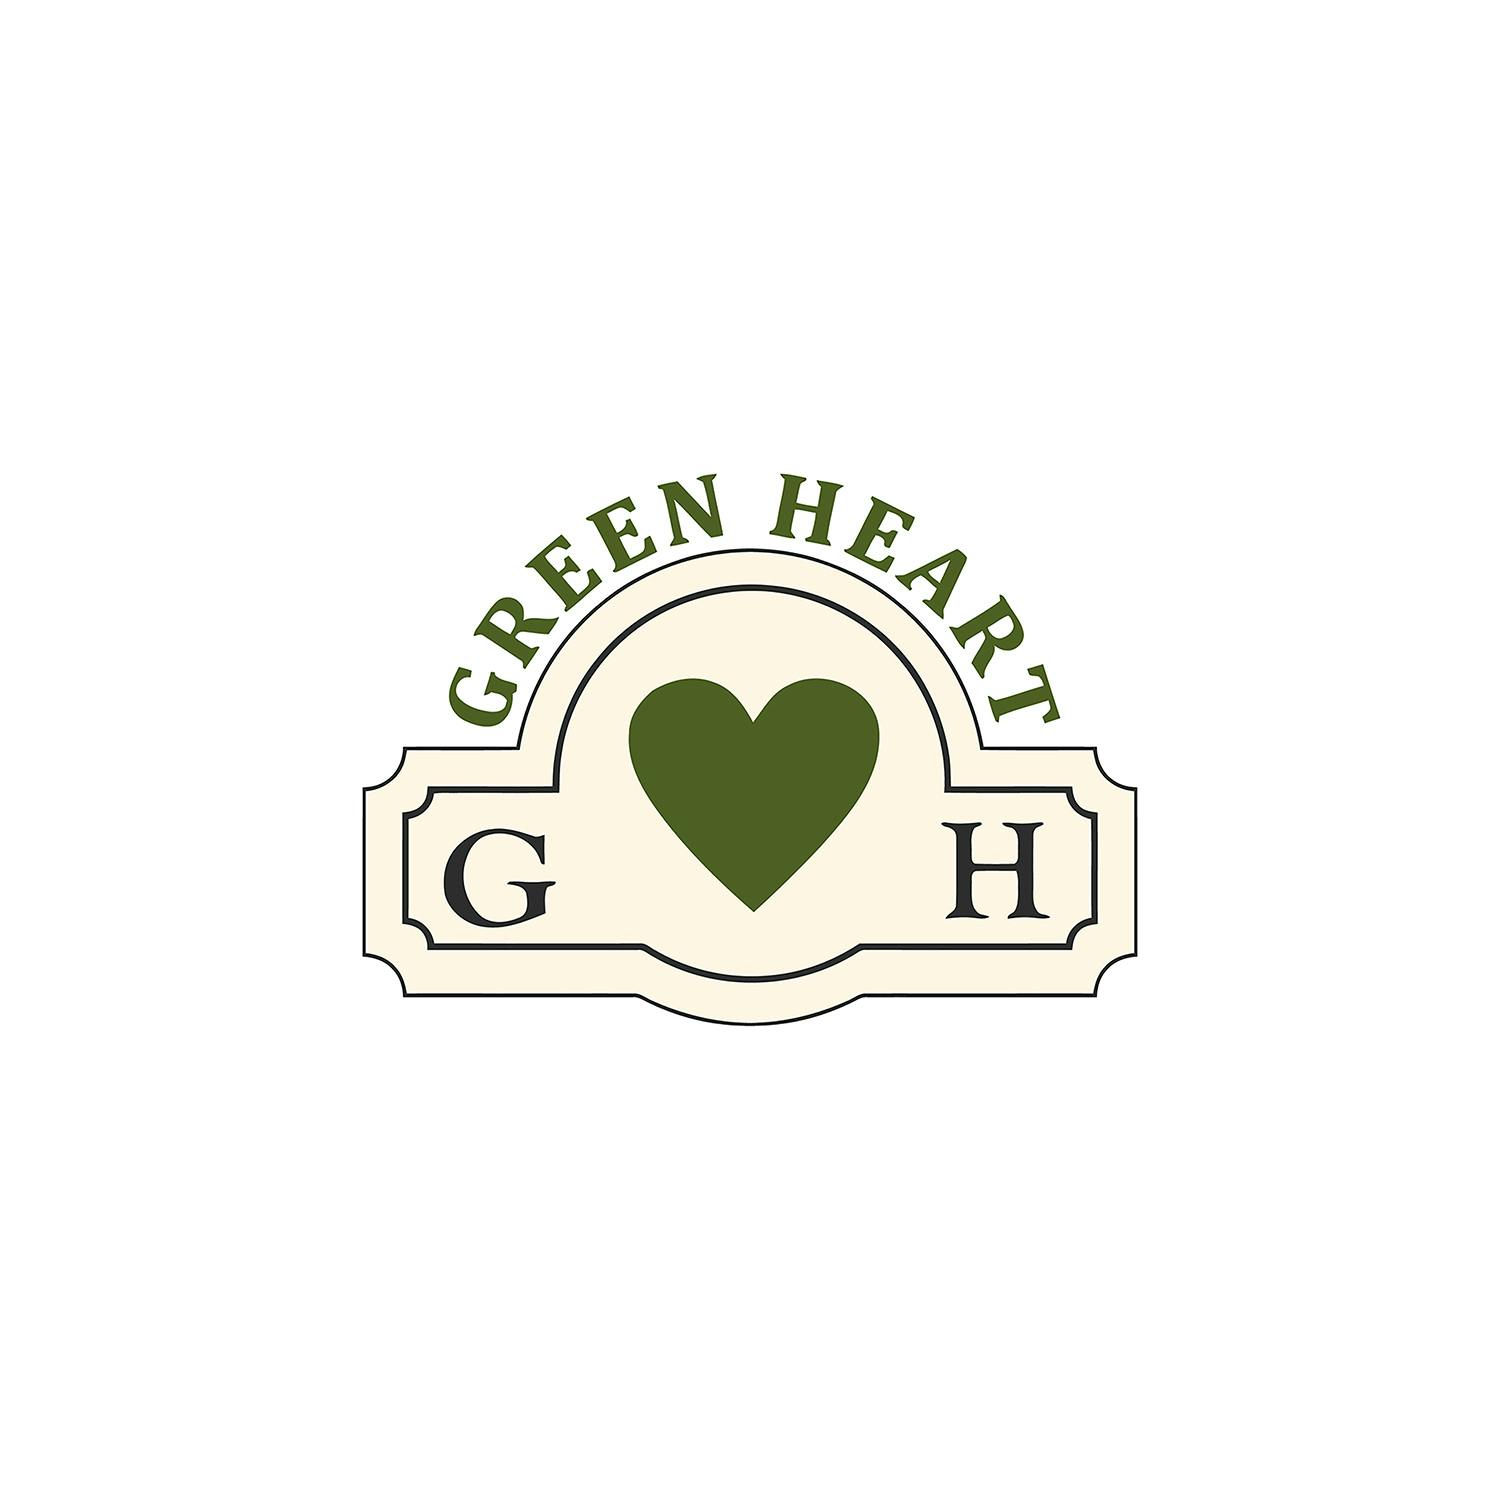 Green Heart Cannabis logo